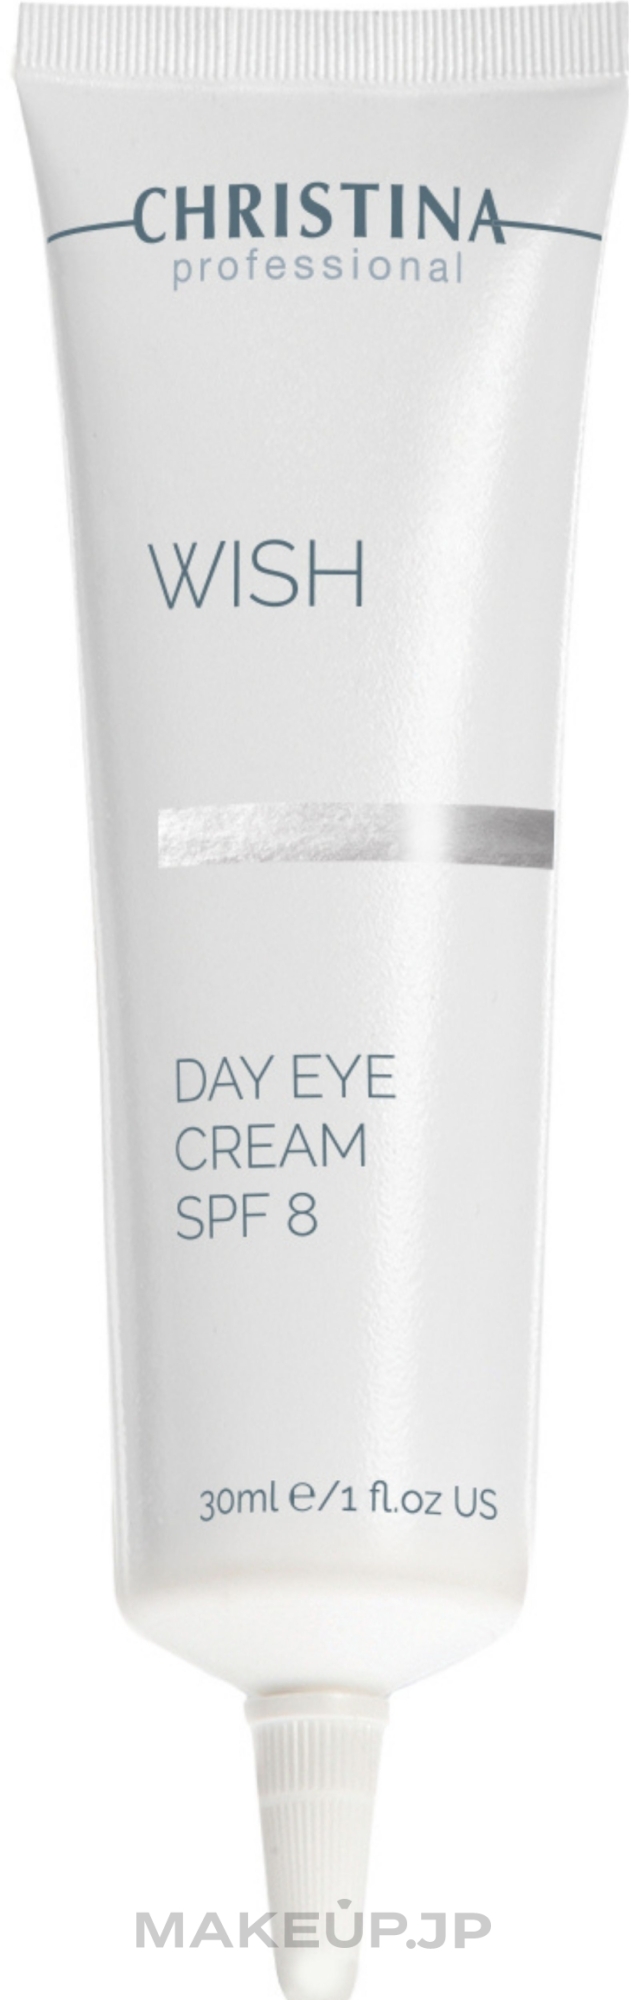 Day Eye Cream SPF 8 - Christina Wish Day Eye Cream SPF-8 — photo 30 ml